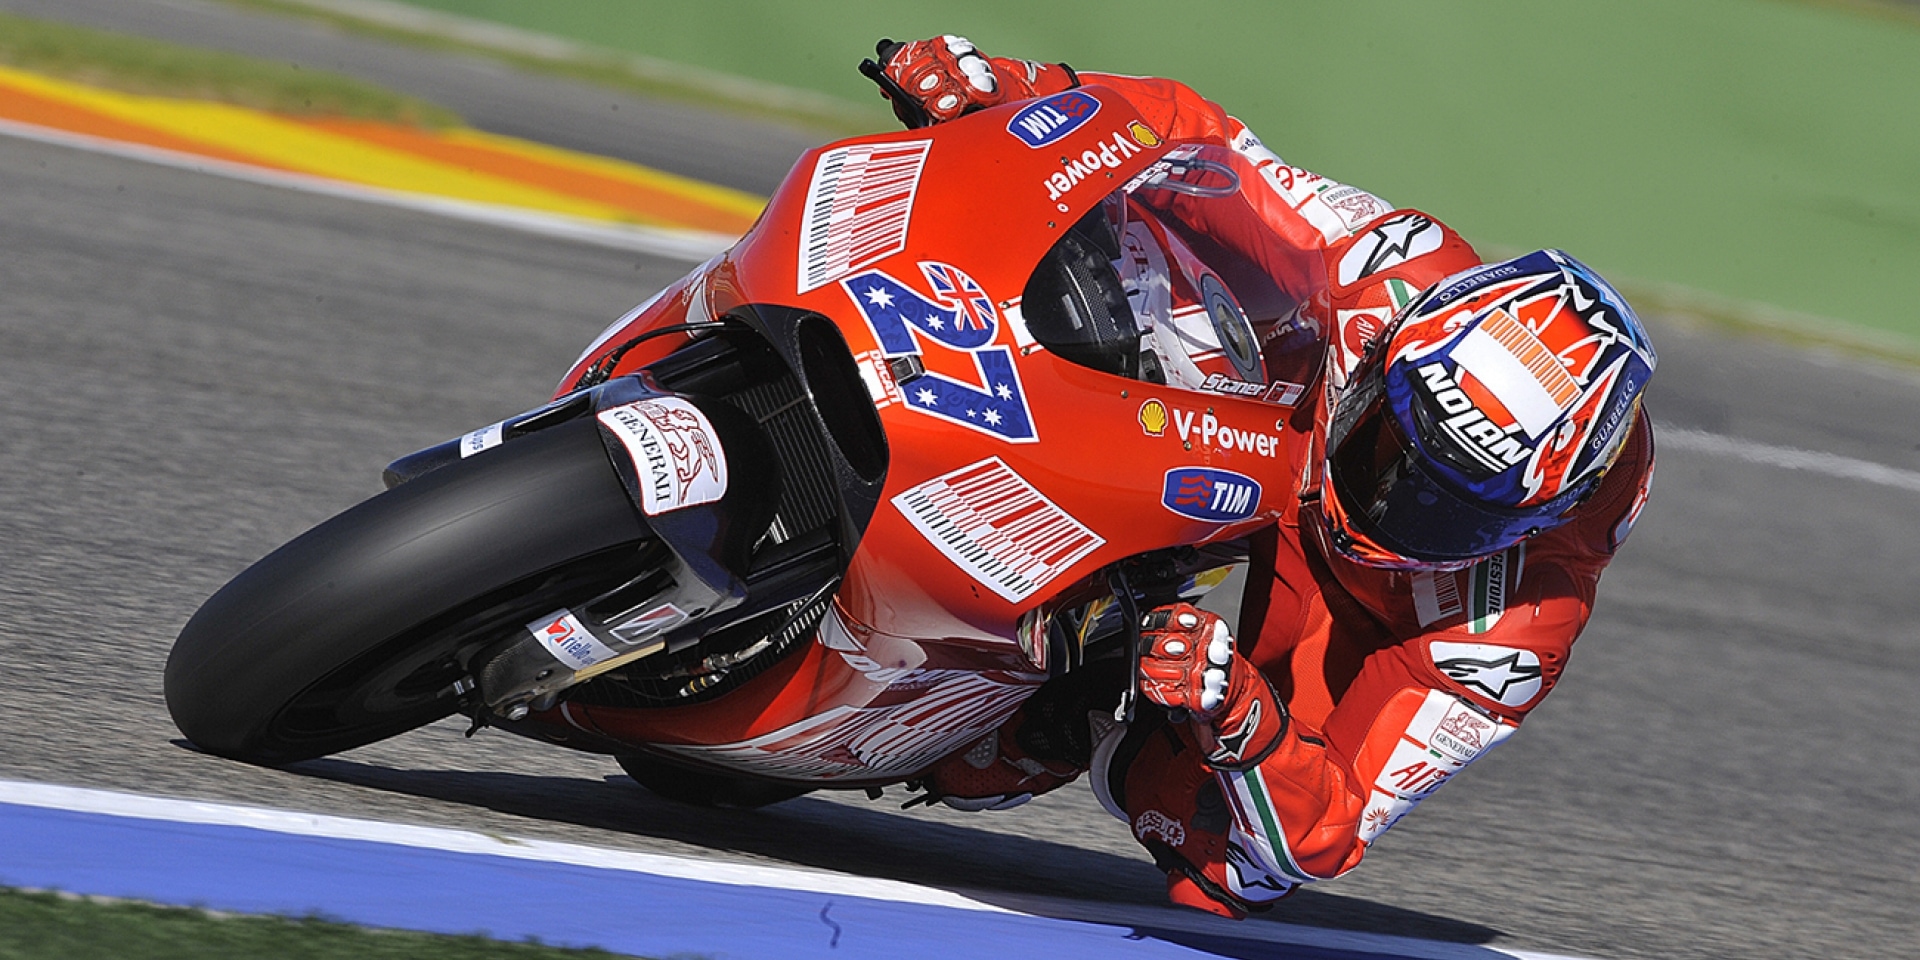 Stoner與HONDA拆夥回歸Ducati懷抱。不排除2016 MotoGP以外卡出戰